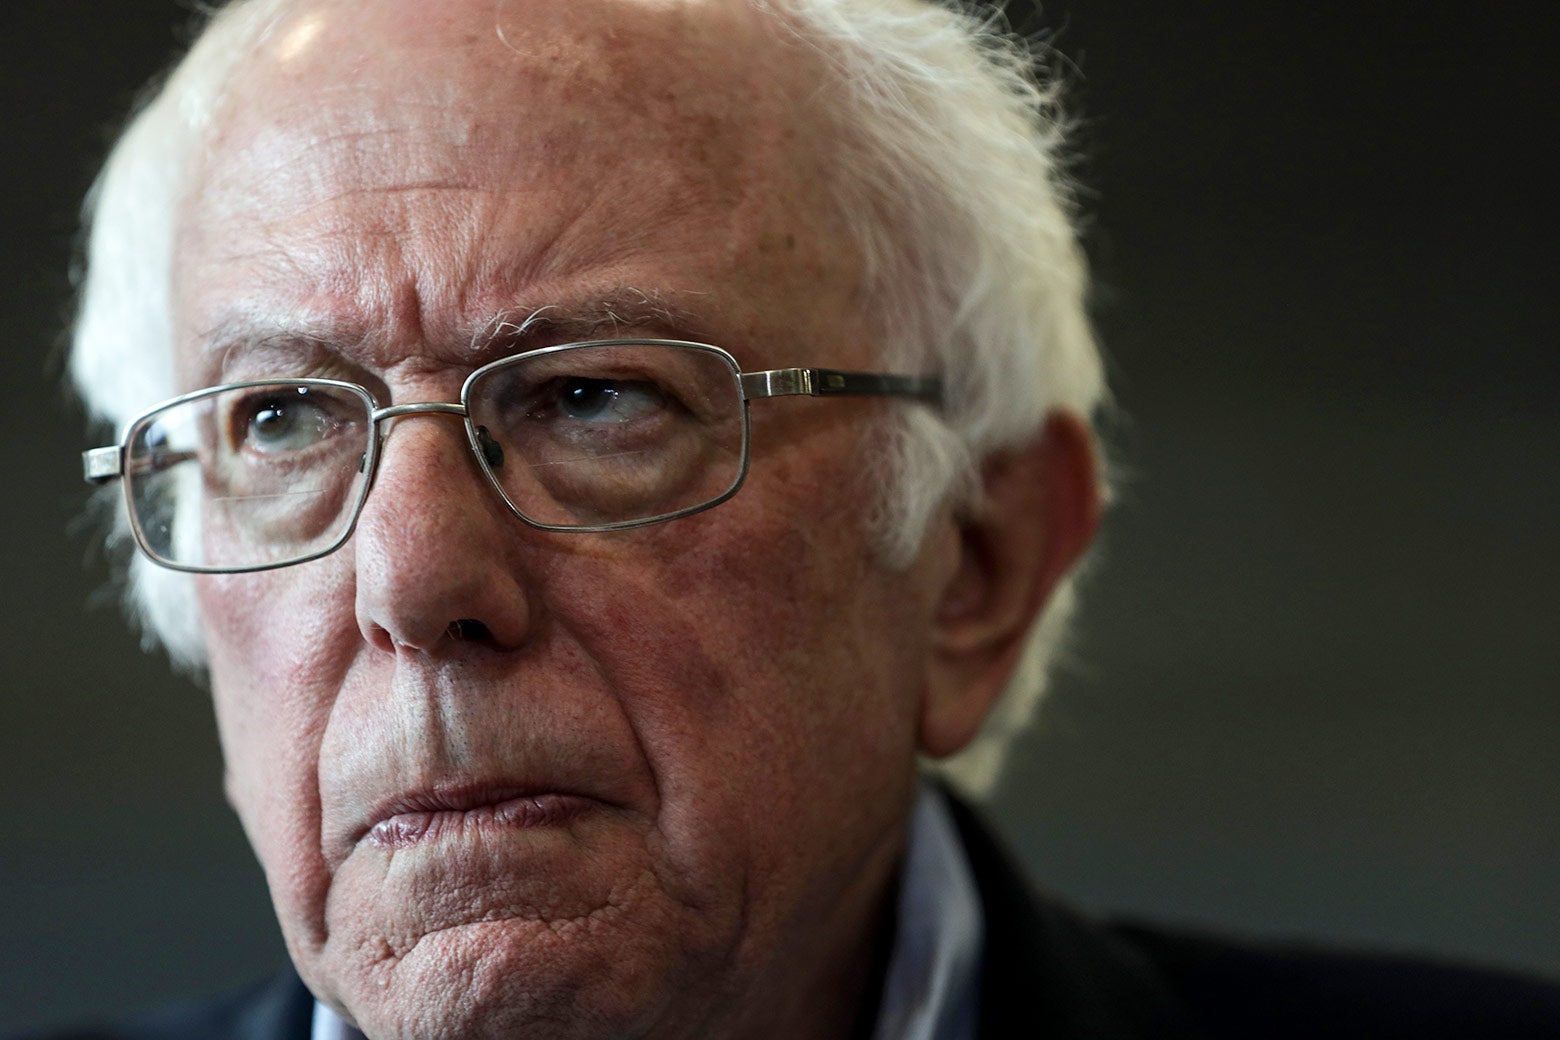 Close-up on Bernie Sanders’ face.